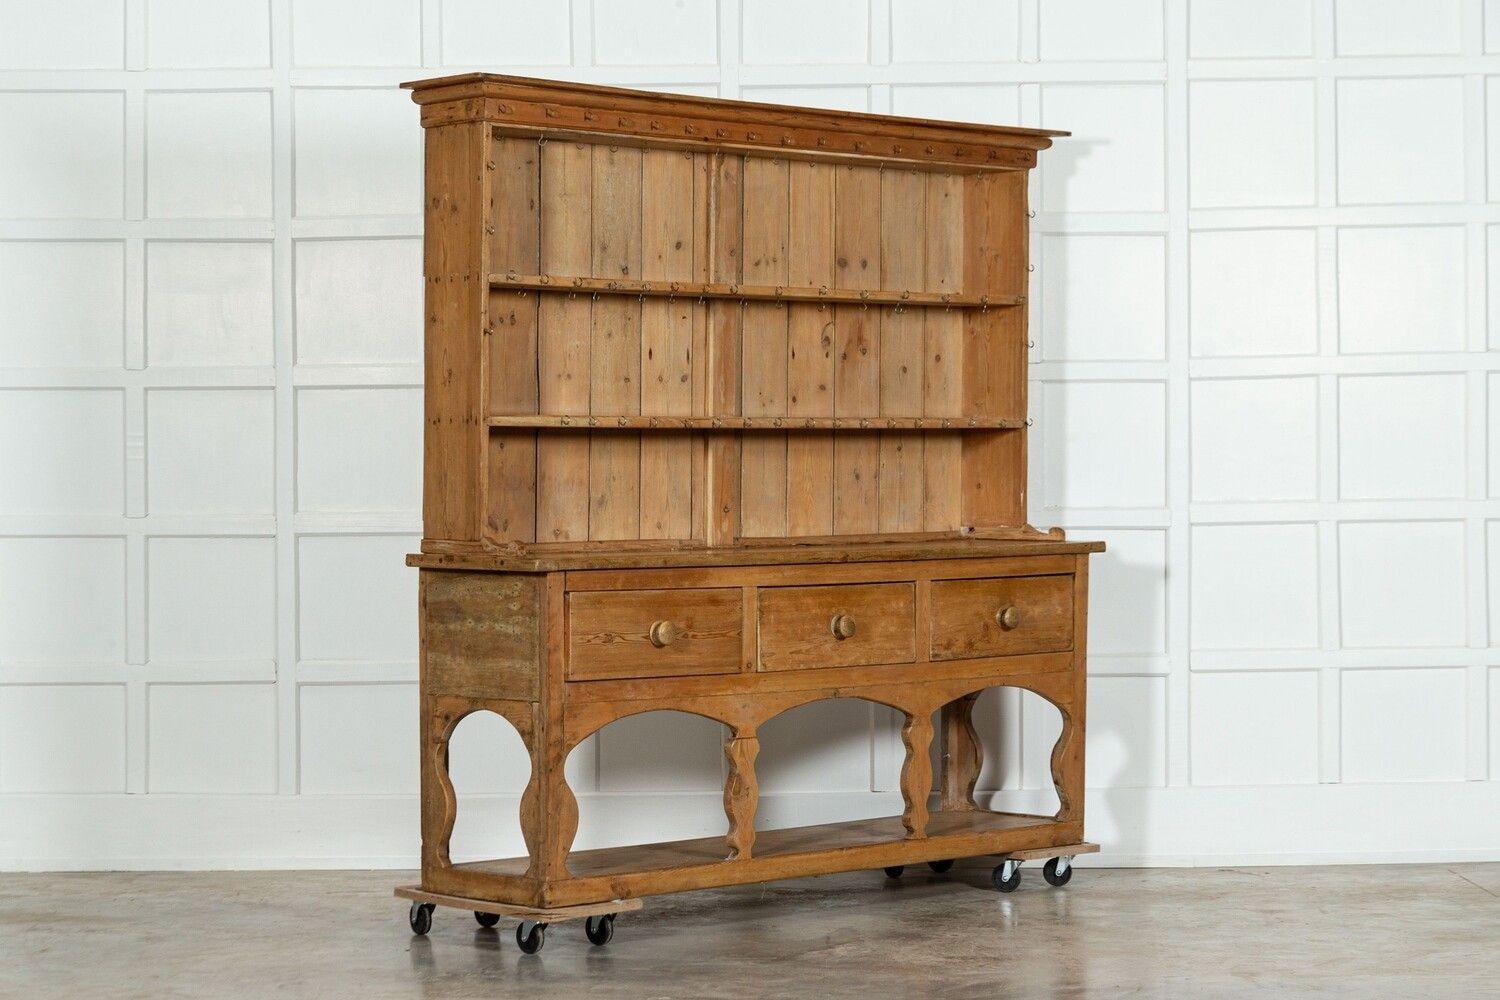 circa 1860
Large 19thC Irish Pine Potboard Dresser
sku 1681
Base W191 x D49 x H79 cm
Top W200 x D36 x H108 cm
Together W200 x D49 x H187 cm